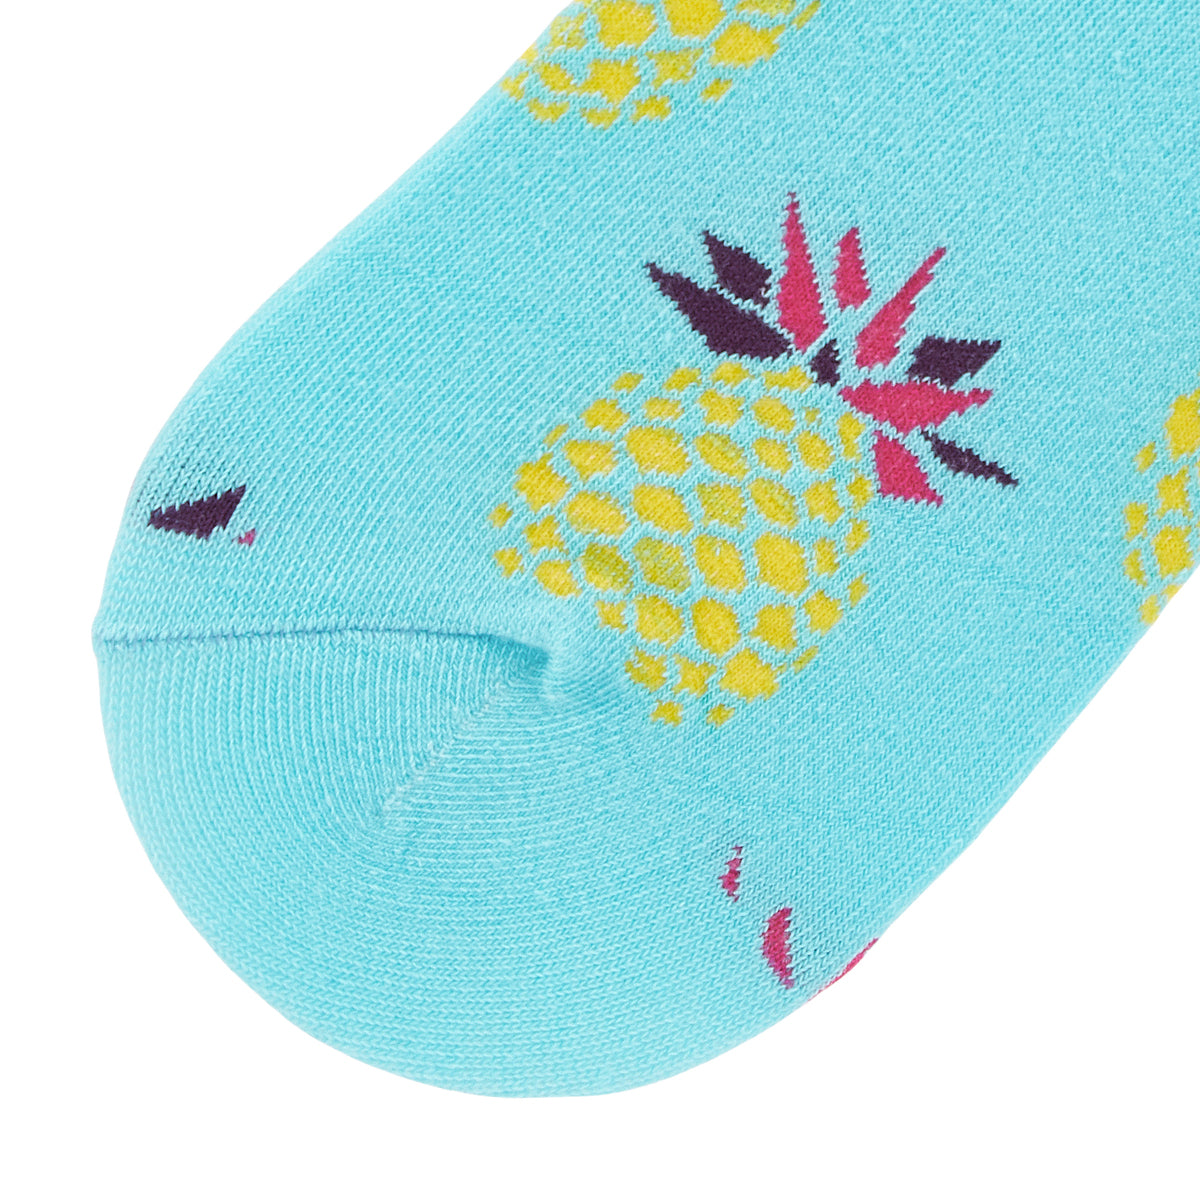 Pineapple Printed Crew Length Socks - IDENTITY Apparel Shop